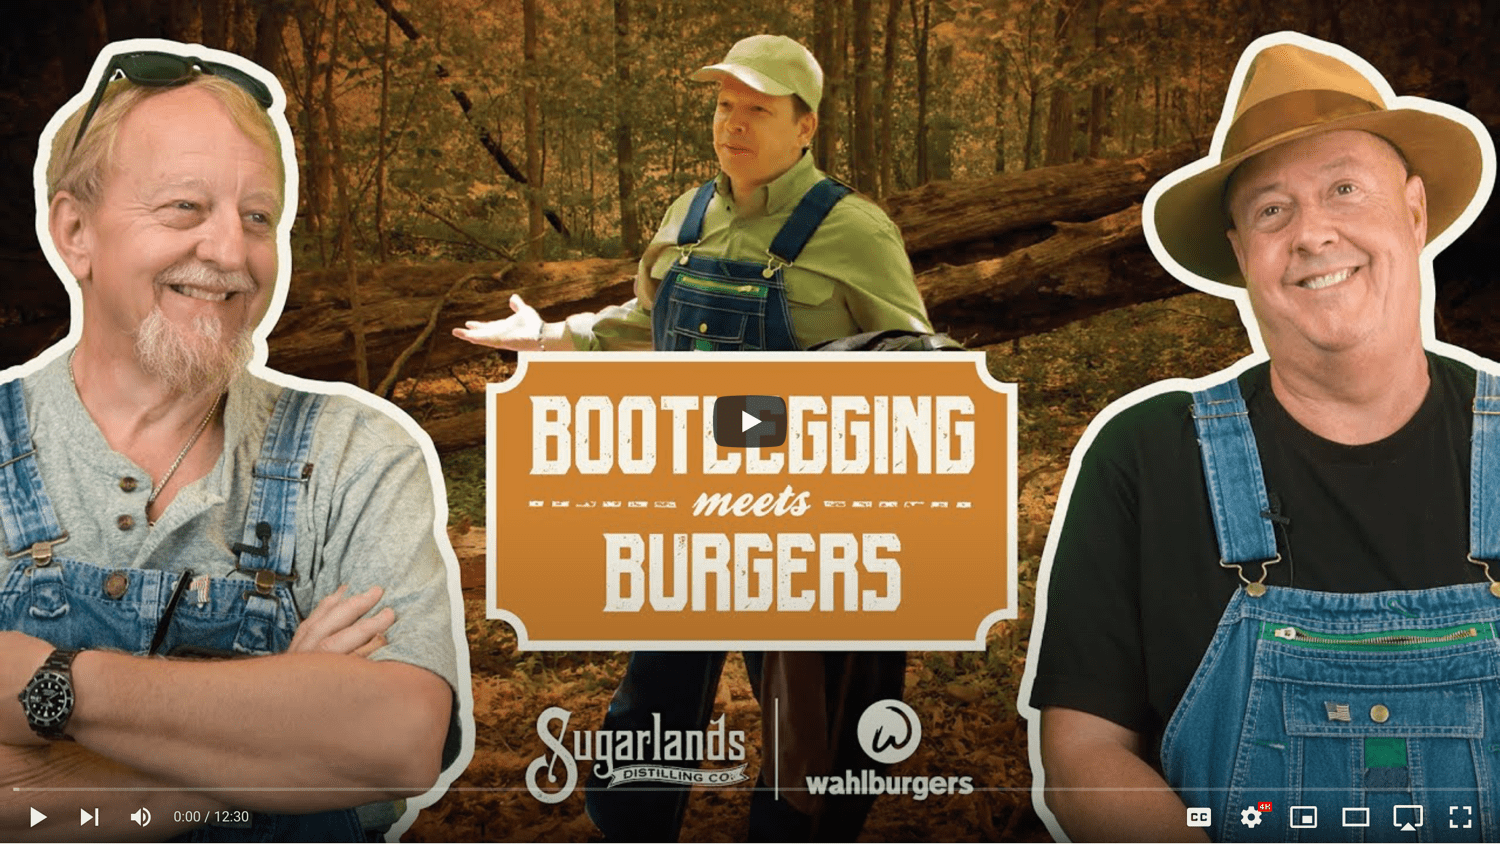 Bootlegging Meets Burgers: the Wahlburgers x Sugarlands Origin Story